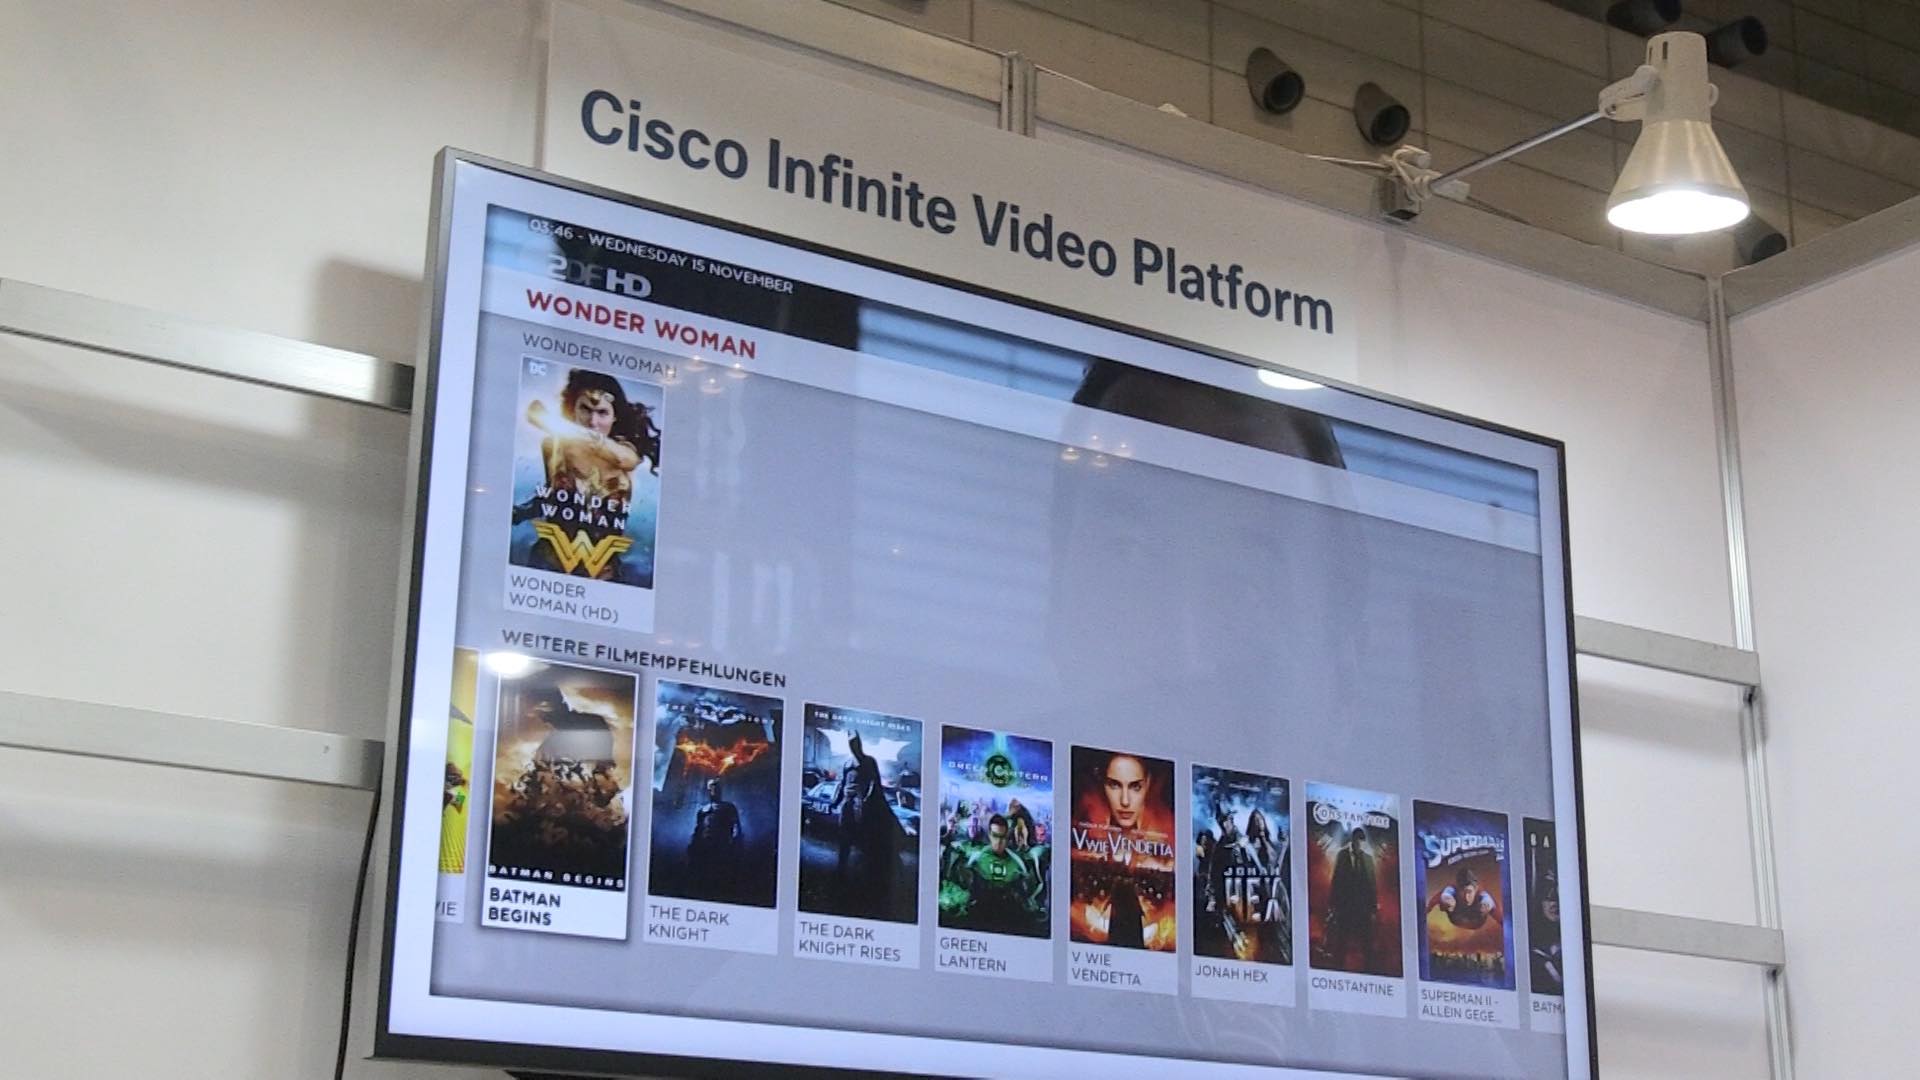 Cisco Infinite Video Platform